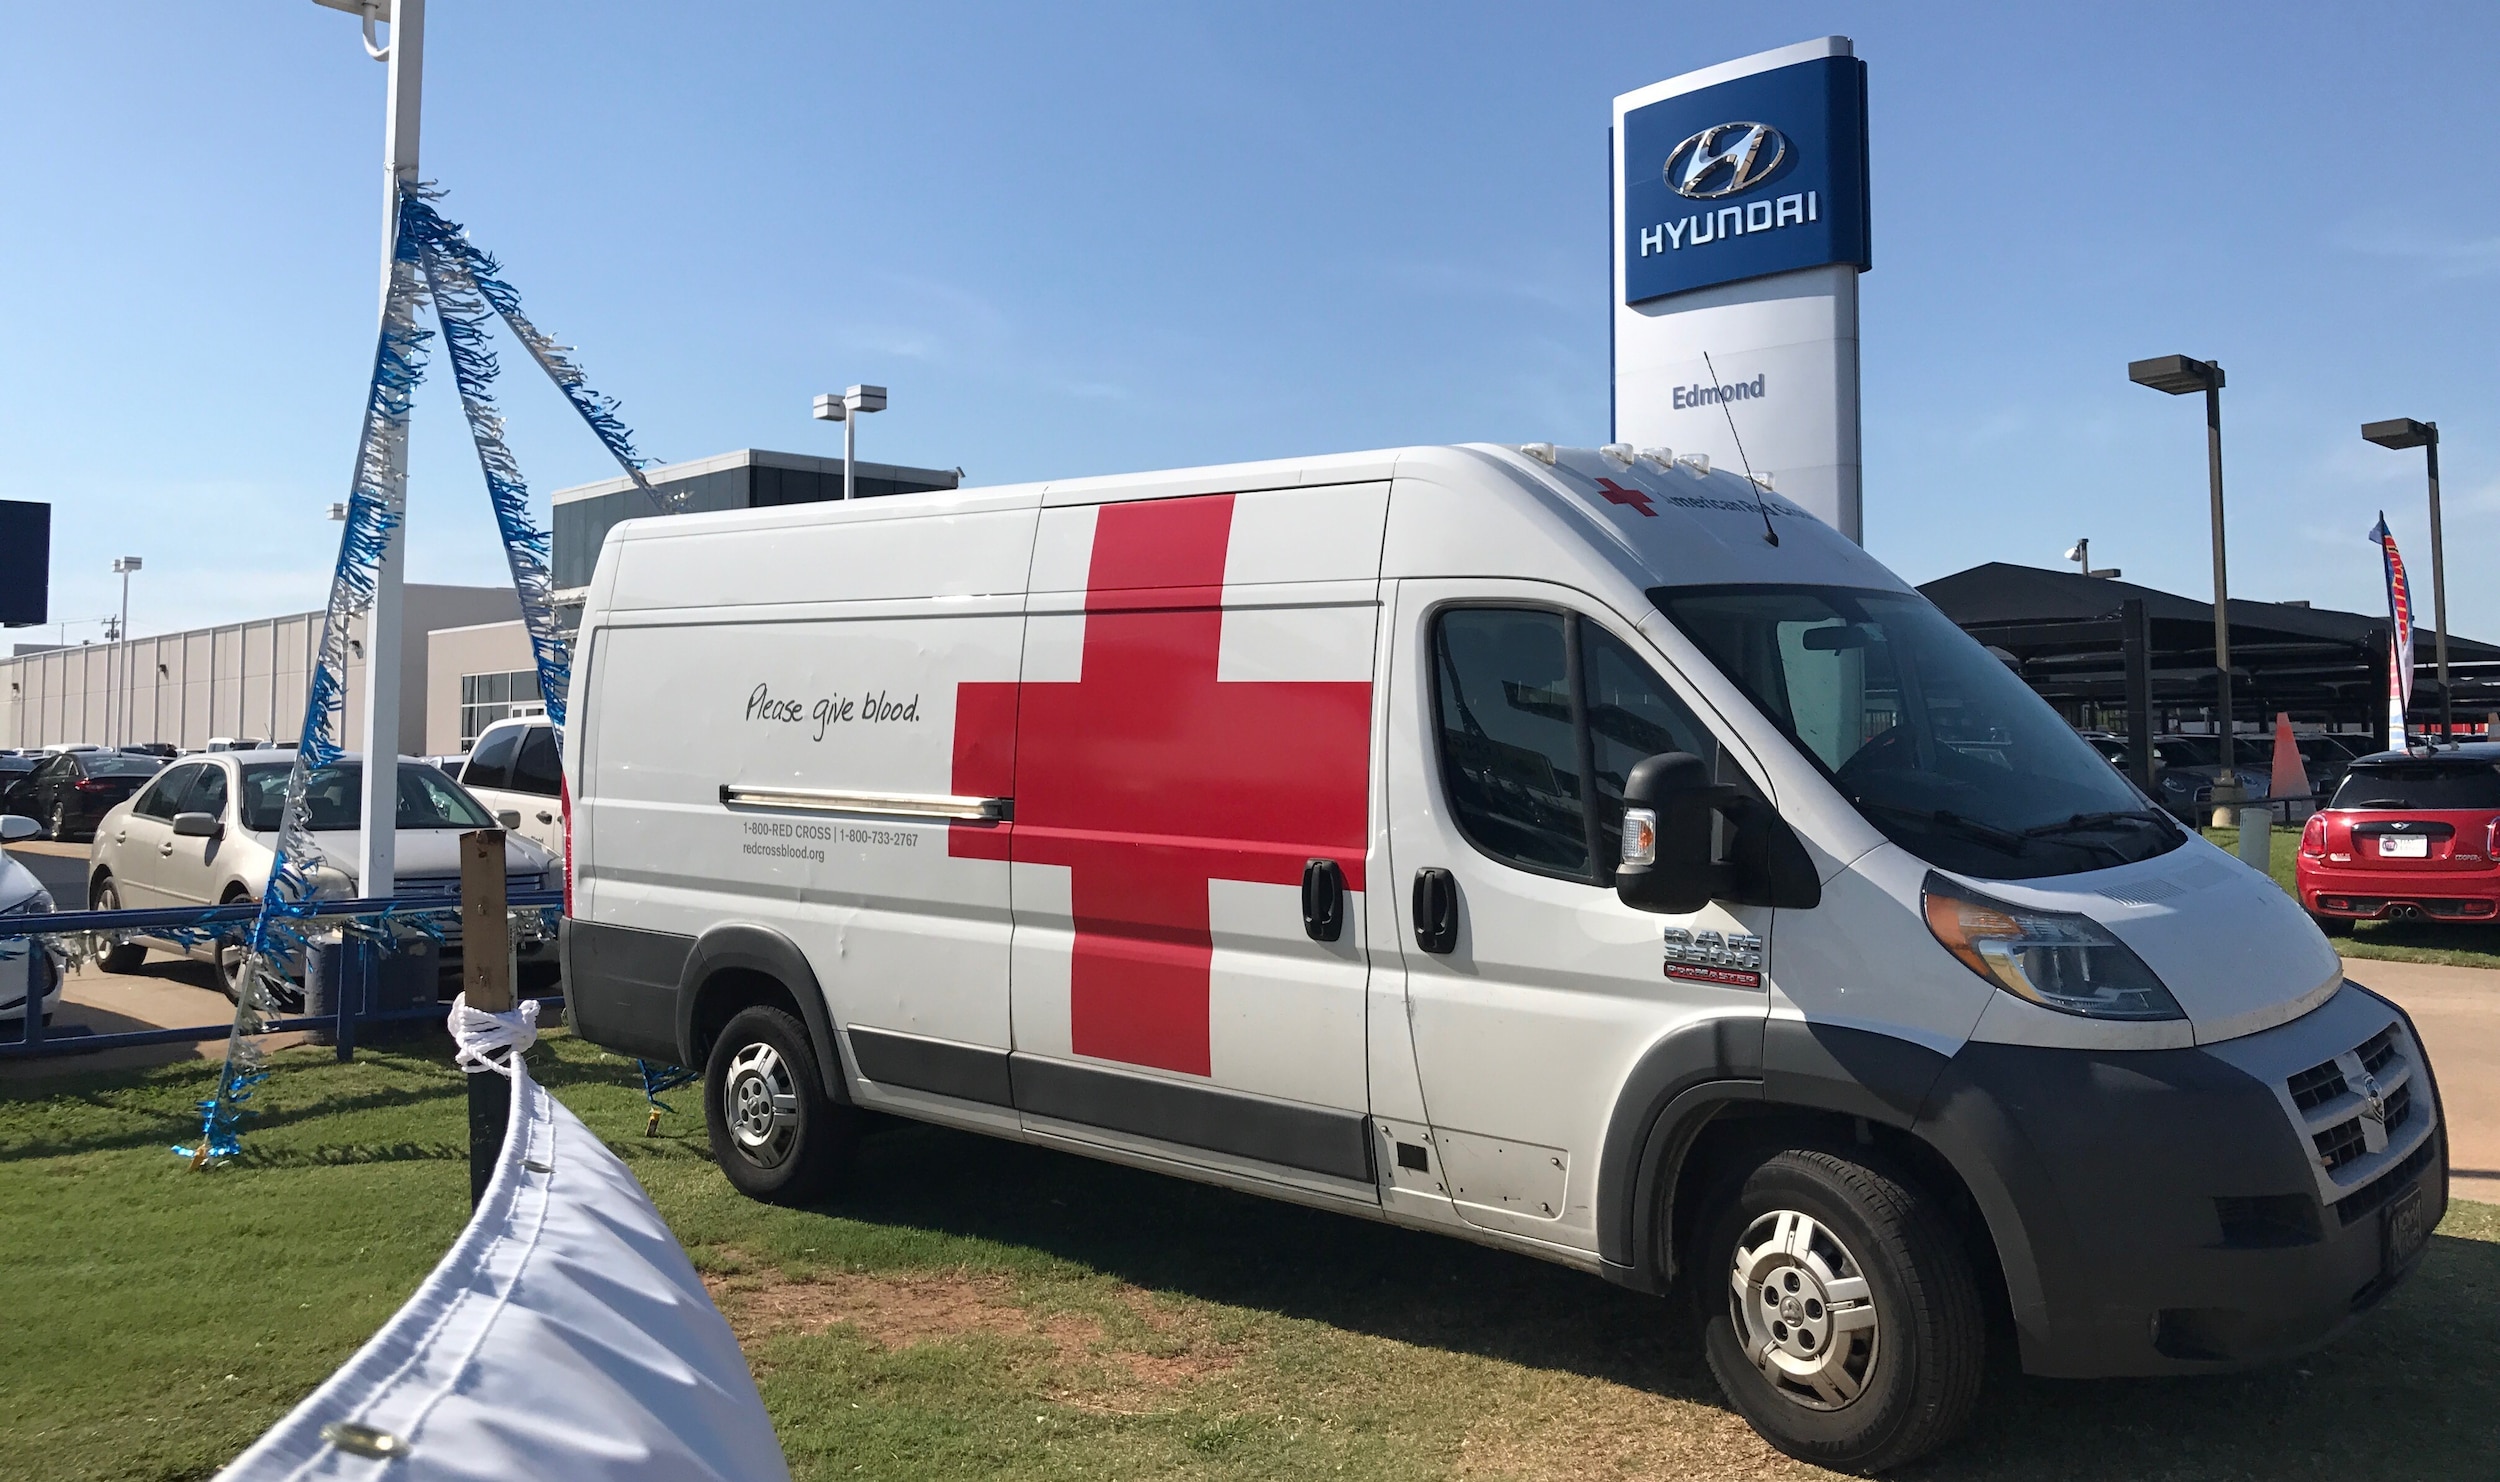 Red Cross blood donation van at Edmond Hyundai